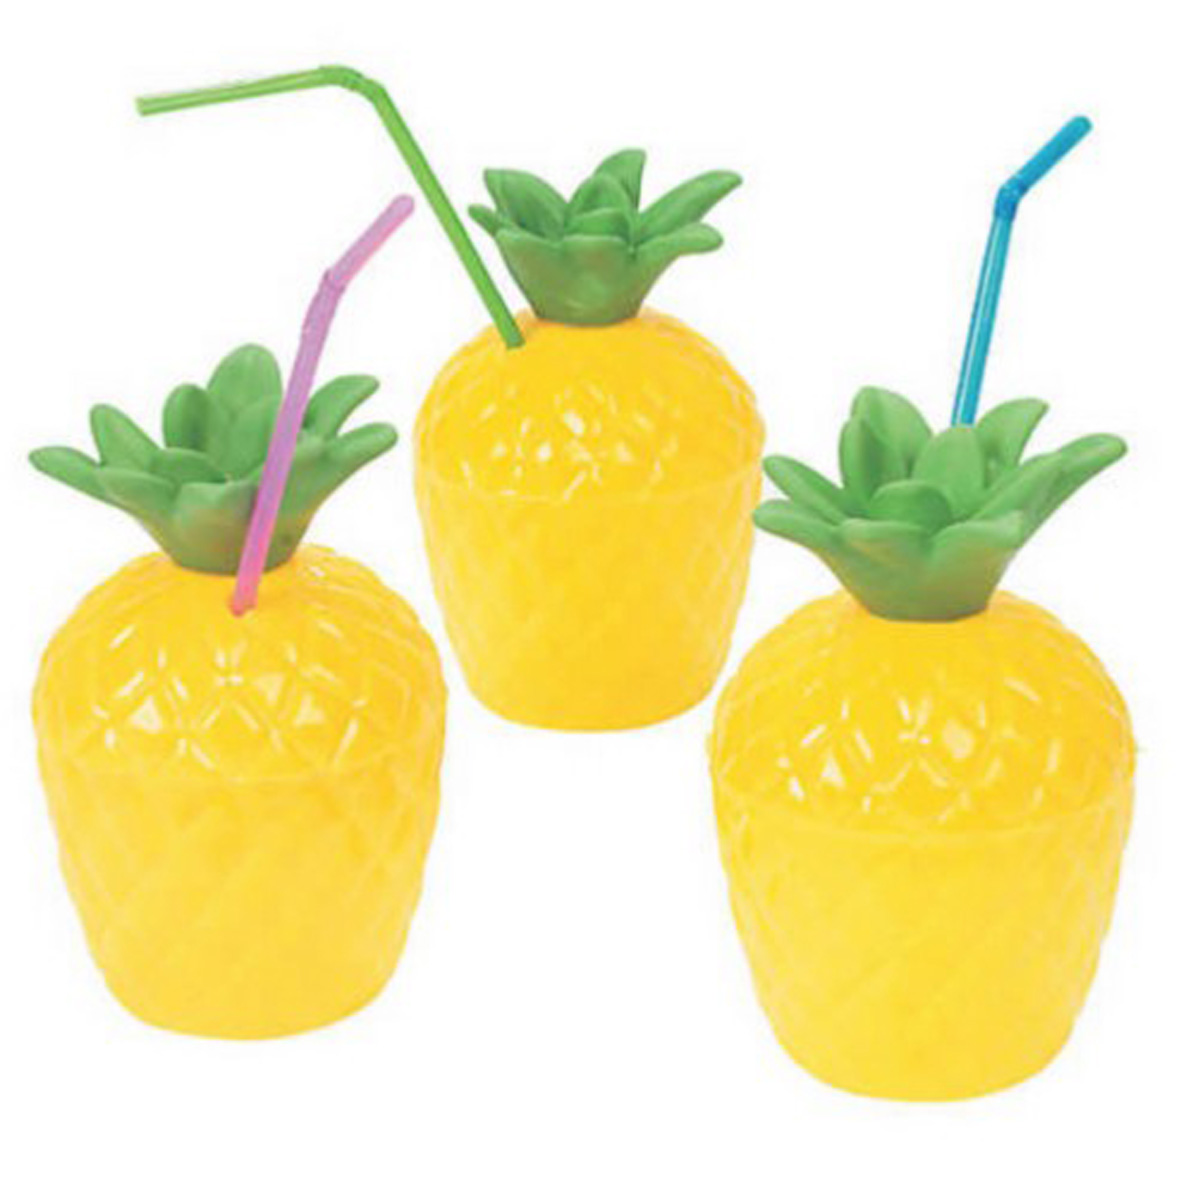 GL-ELY1099 8.5oz Plastic Pineapple Drinking Mug with Straw